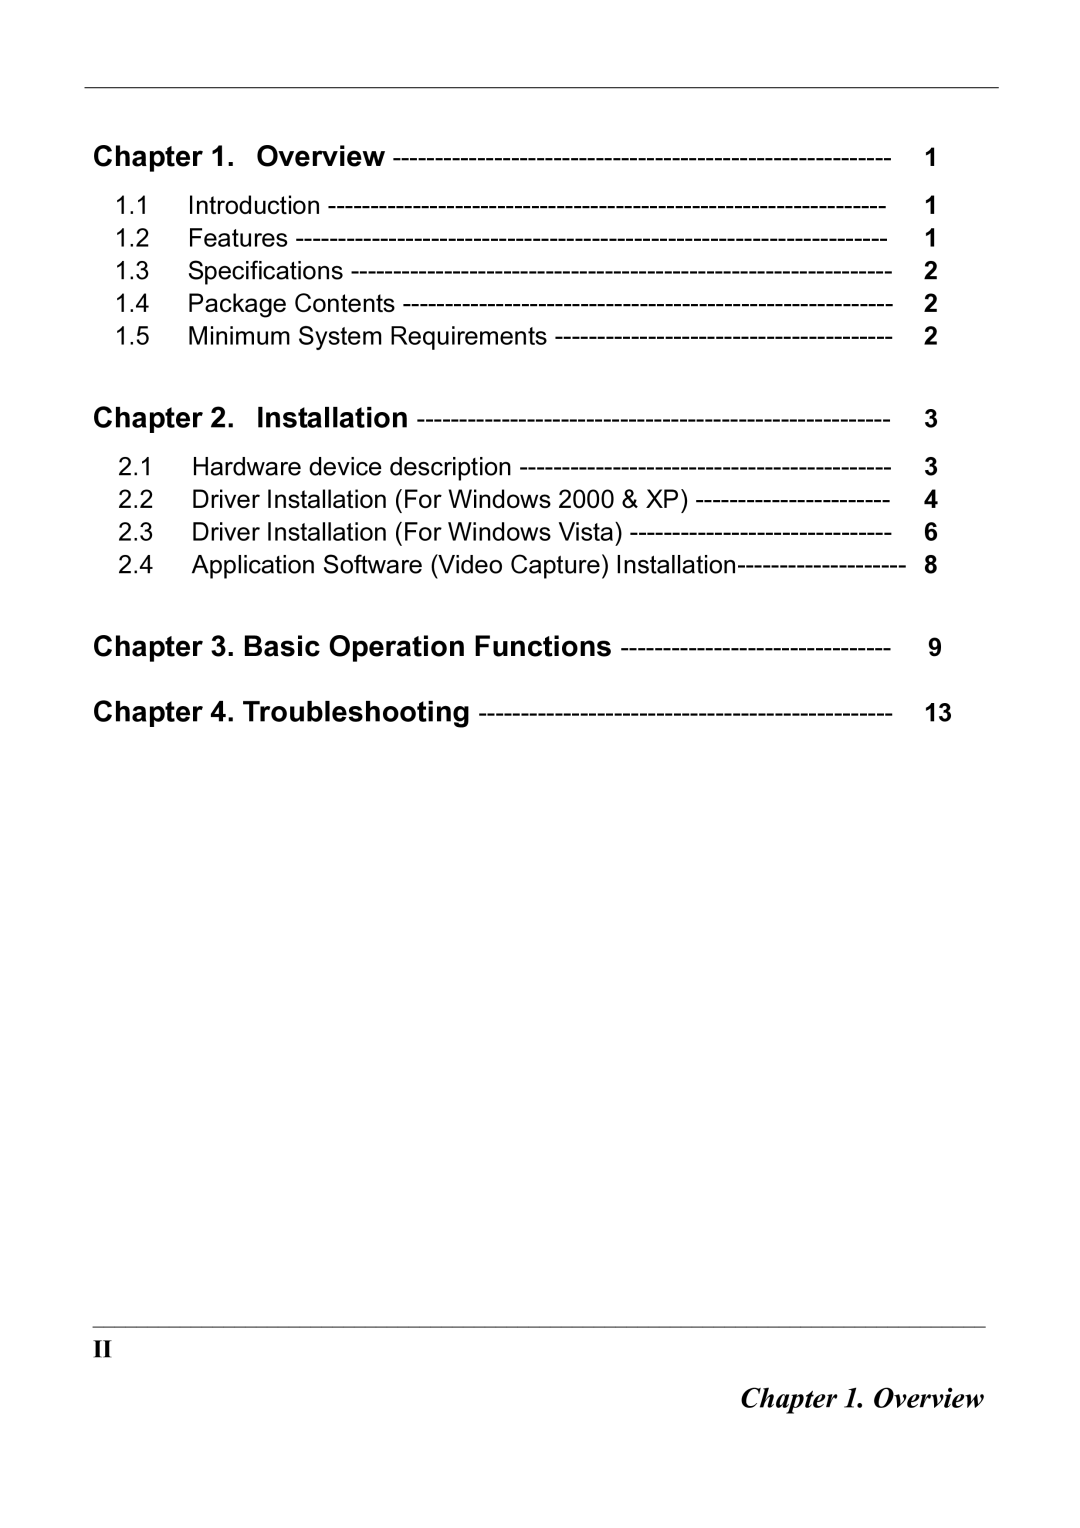 Quatech USB 2.0 user manual Chapter 